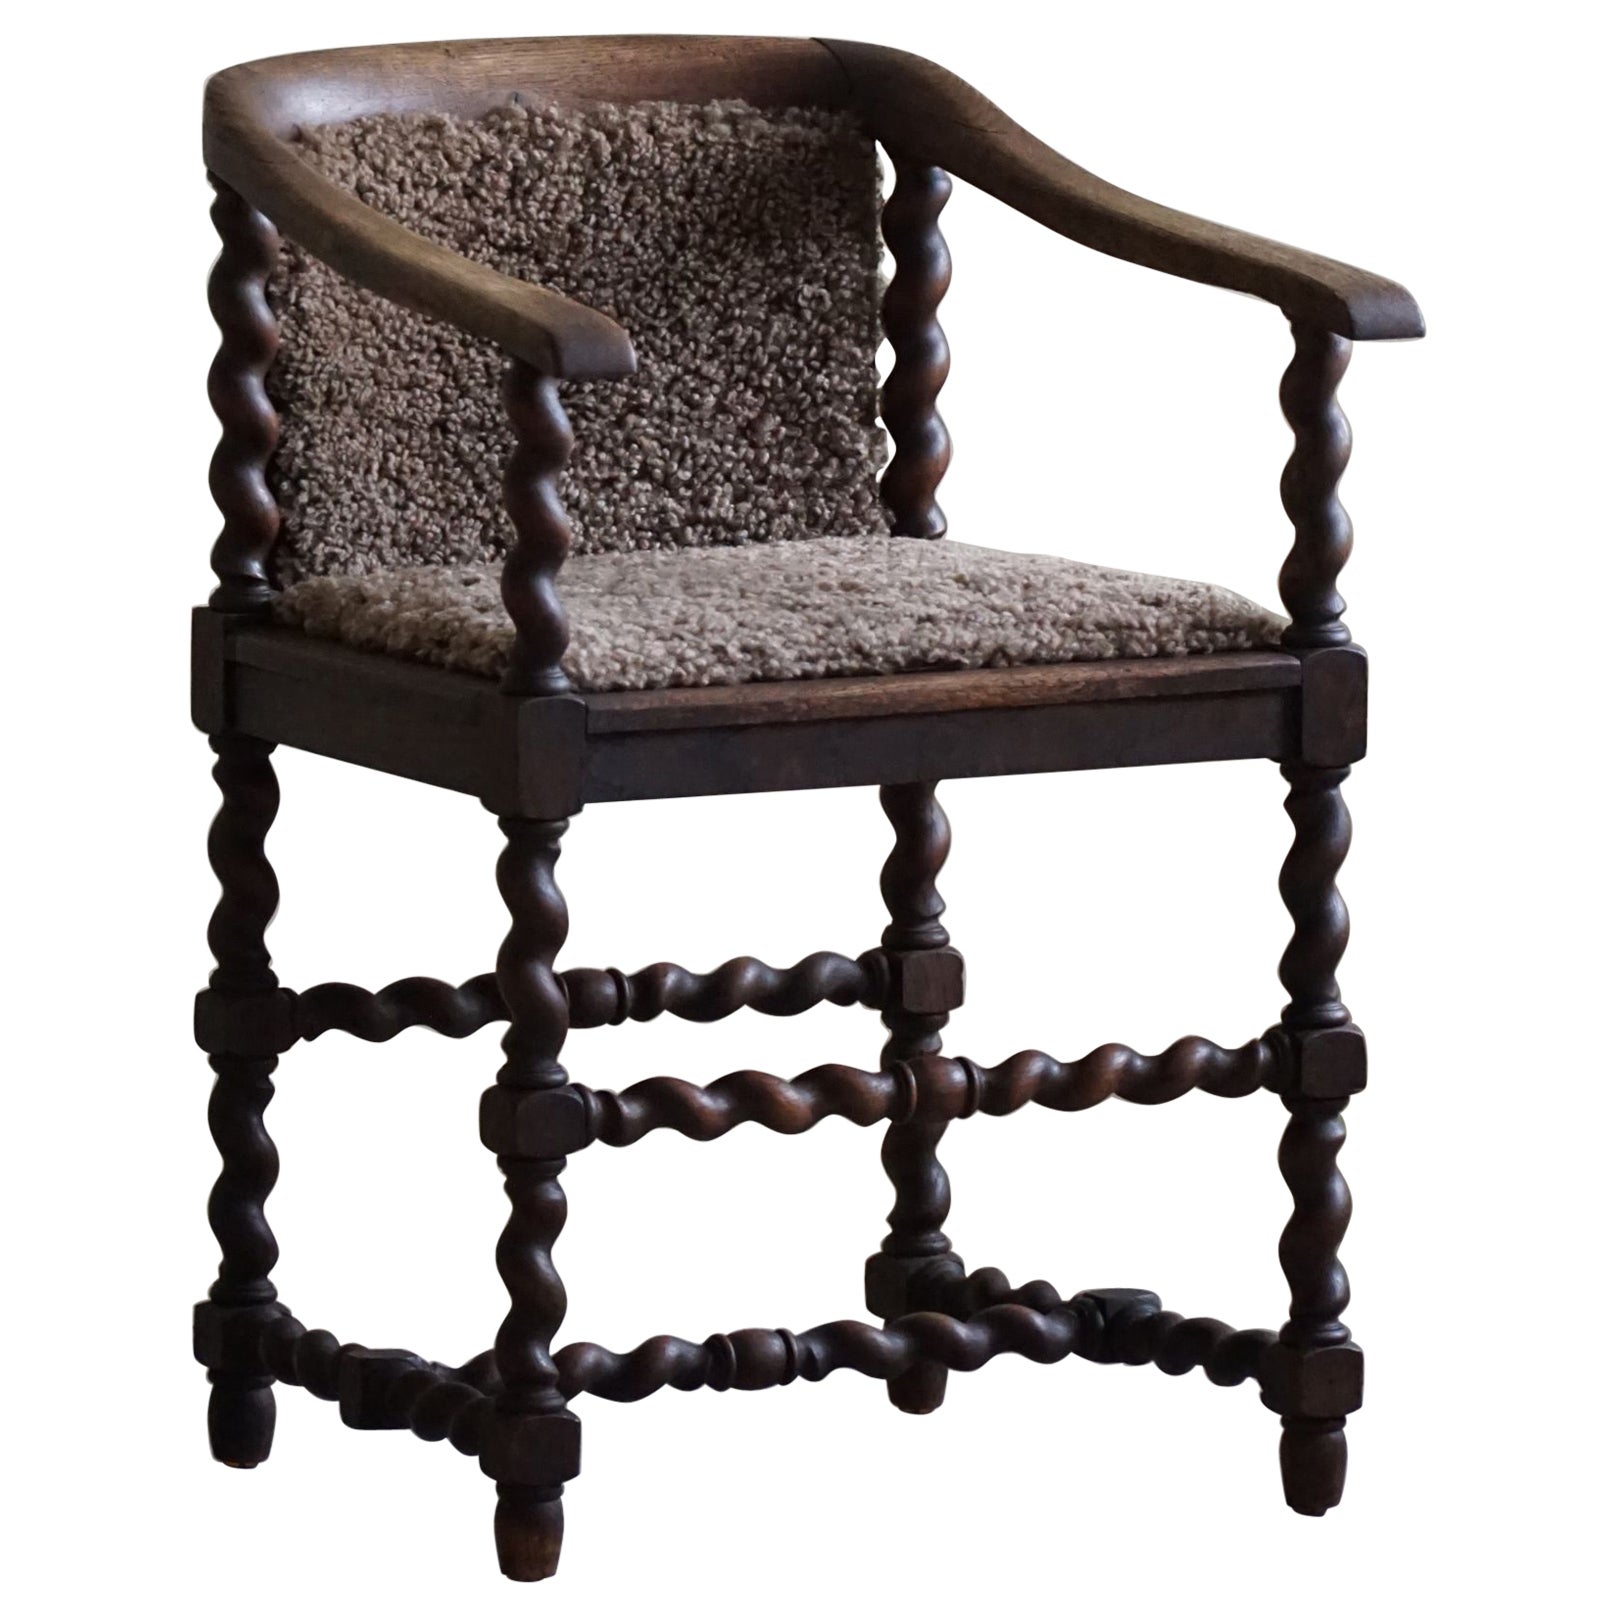 Antiker französischer Sessel, Barley gedreht, neu gepolstert mit Lammfell, 19. Jahrhundert